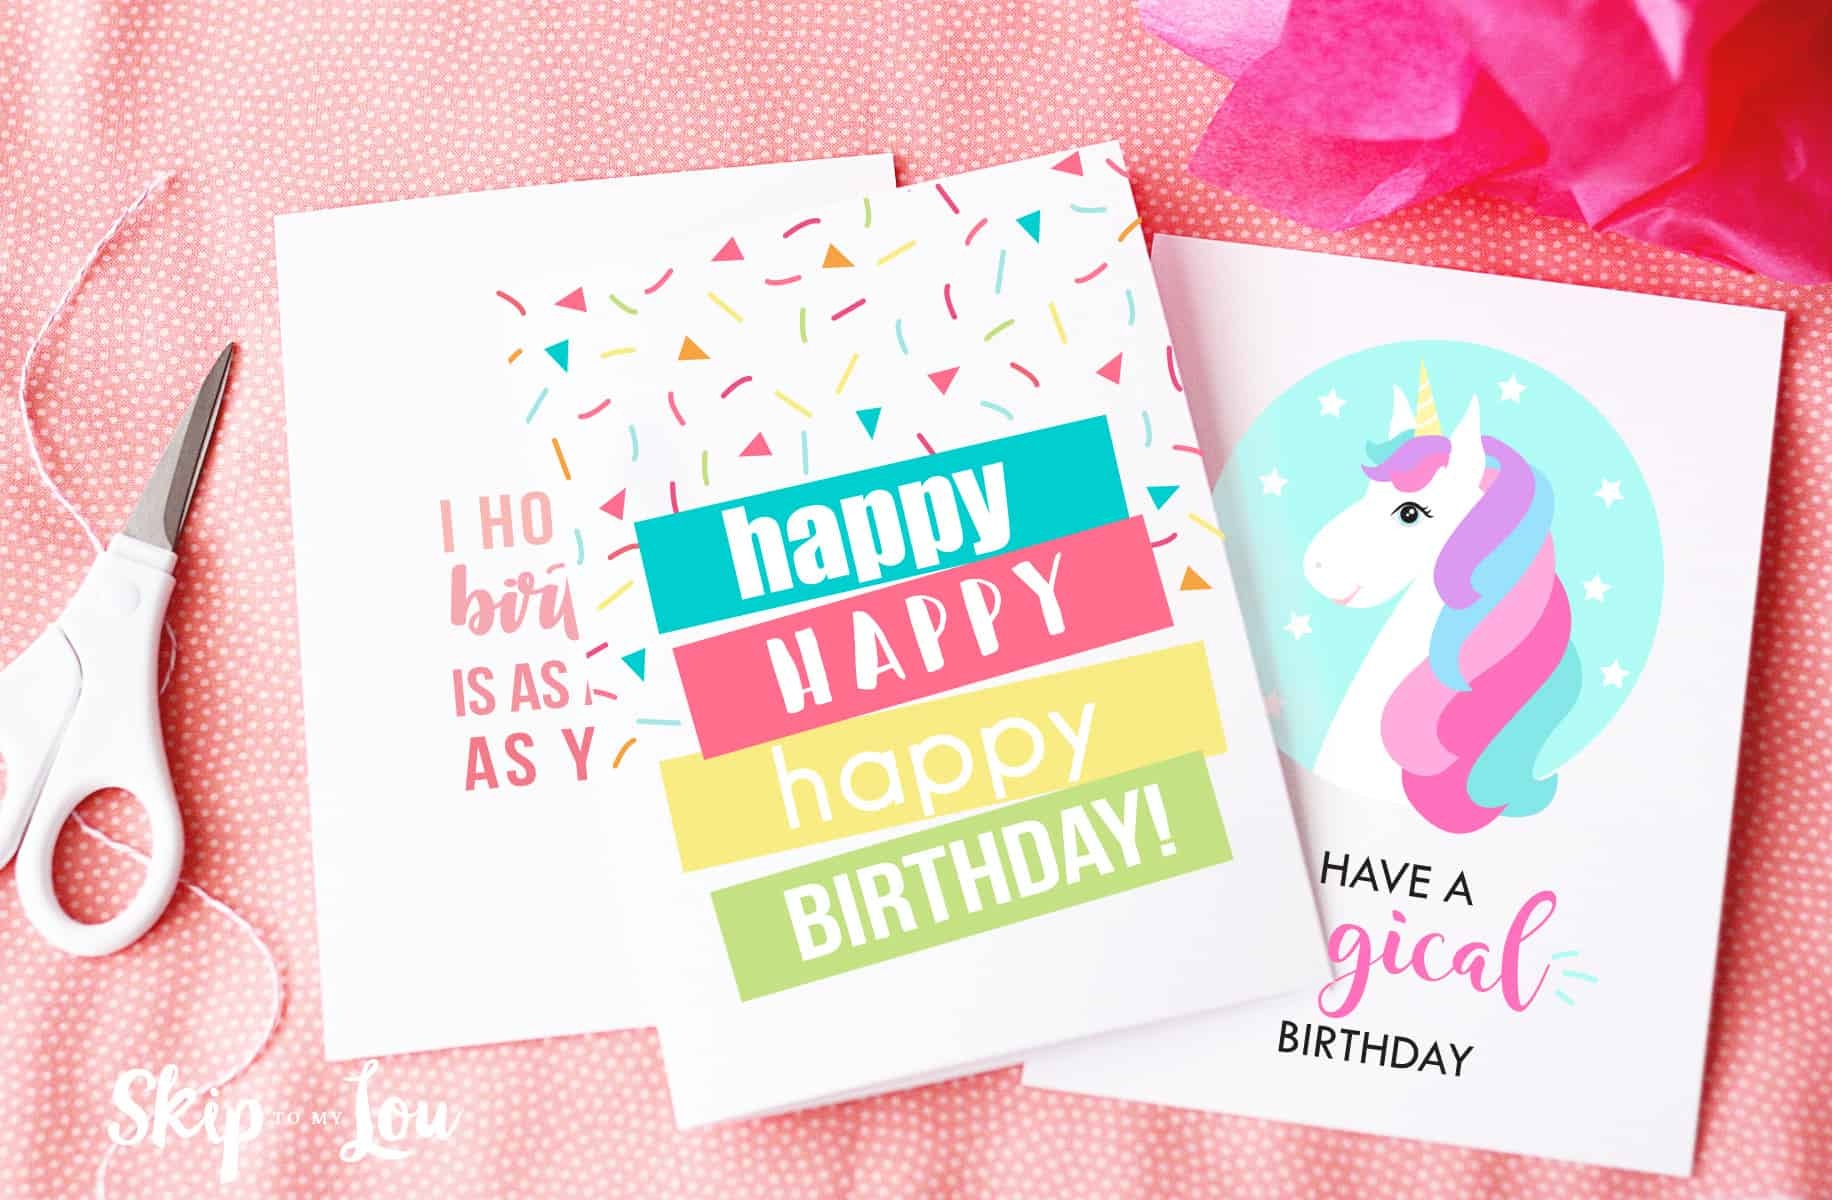 Free Printable Birthday Cards | Skip To My Lou - Free Printable Birthday Cards For Your Best Friend